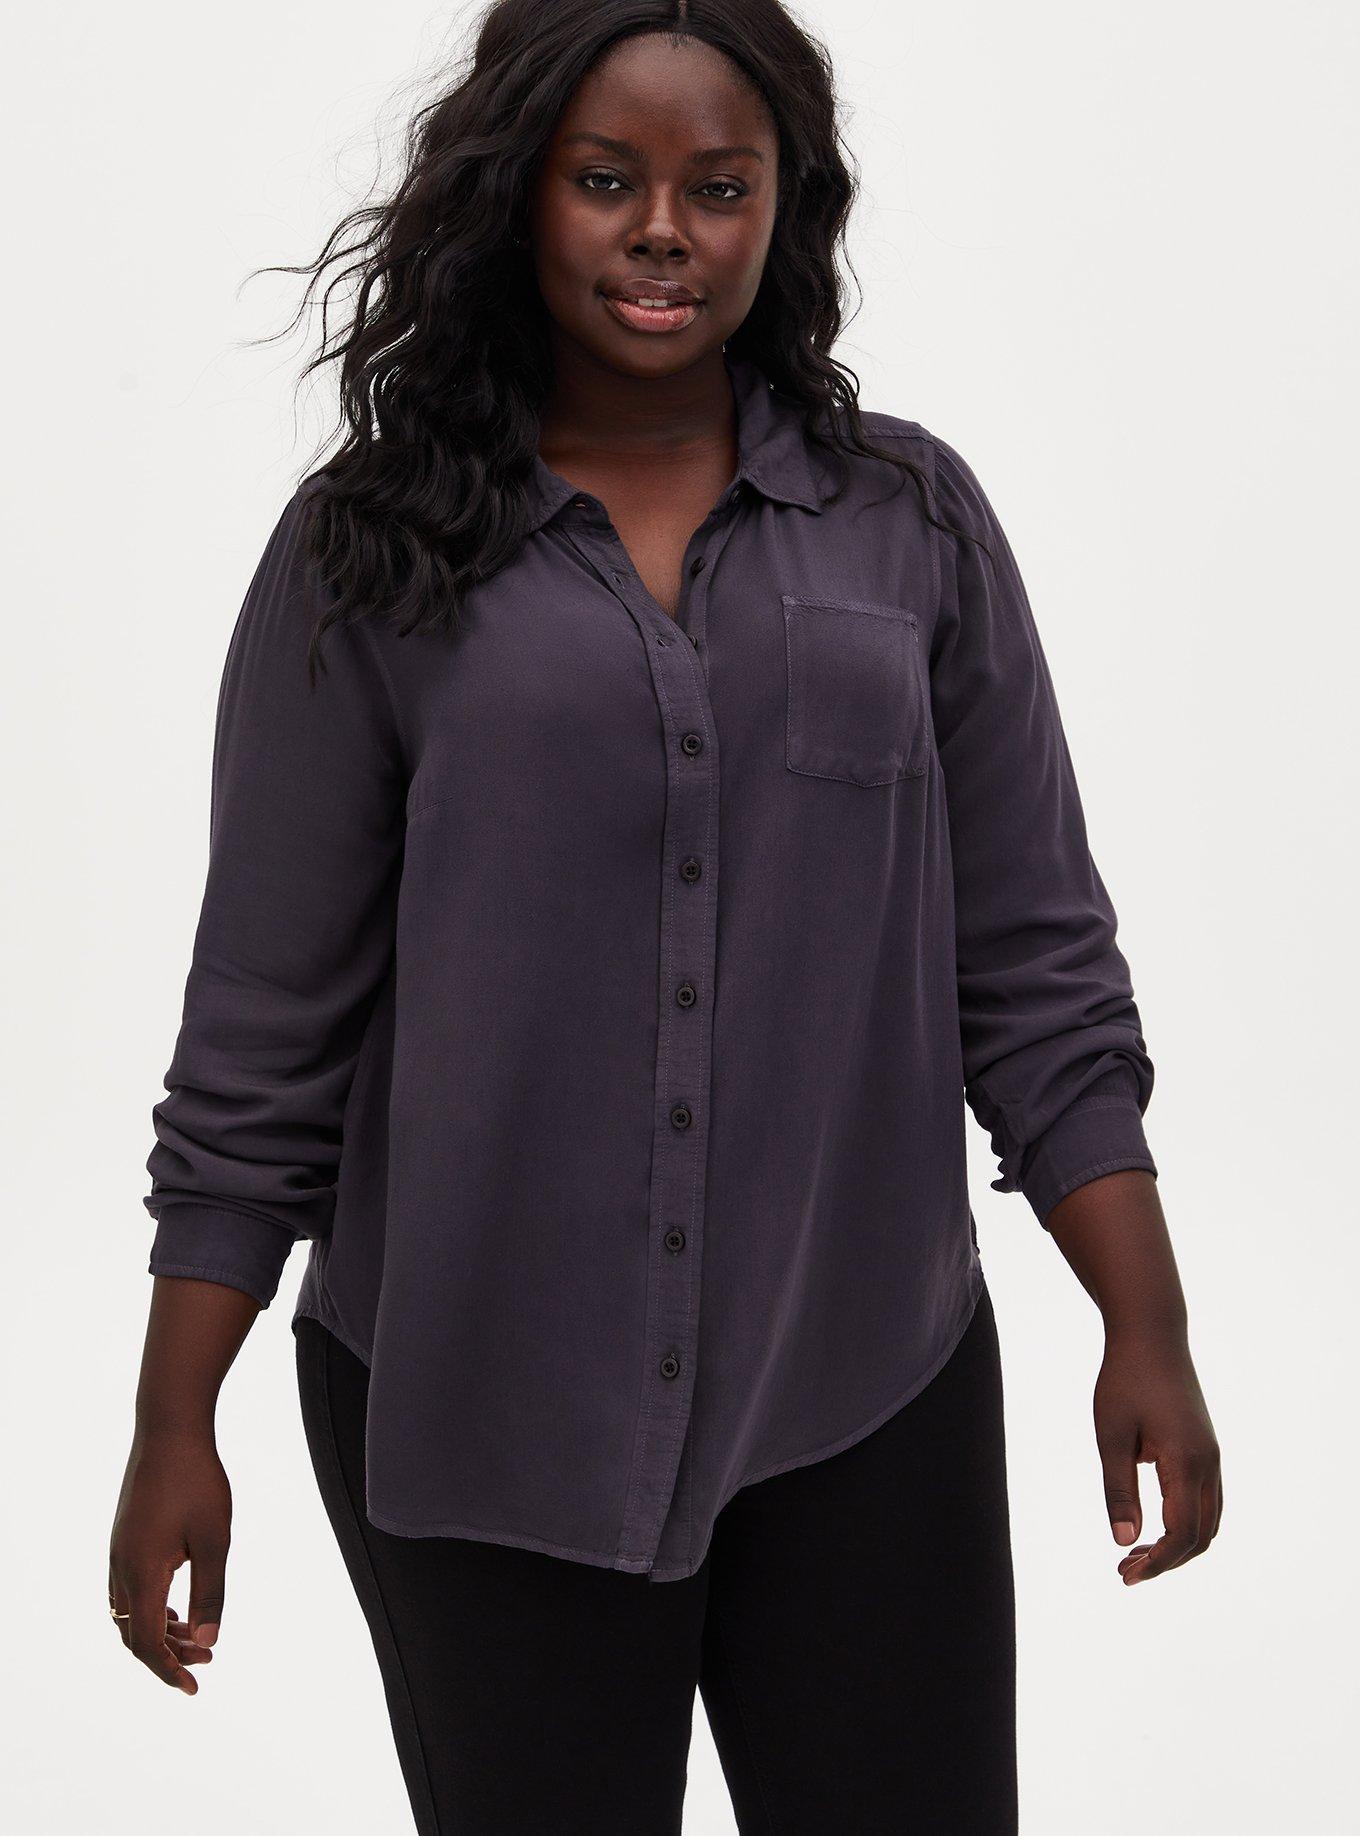 Torrid Shirt Top Blouse Womens 2 Plus Size 2X Green Roll Tab Button 3/4  Sleeve